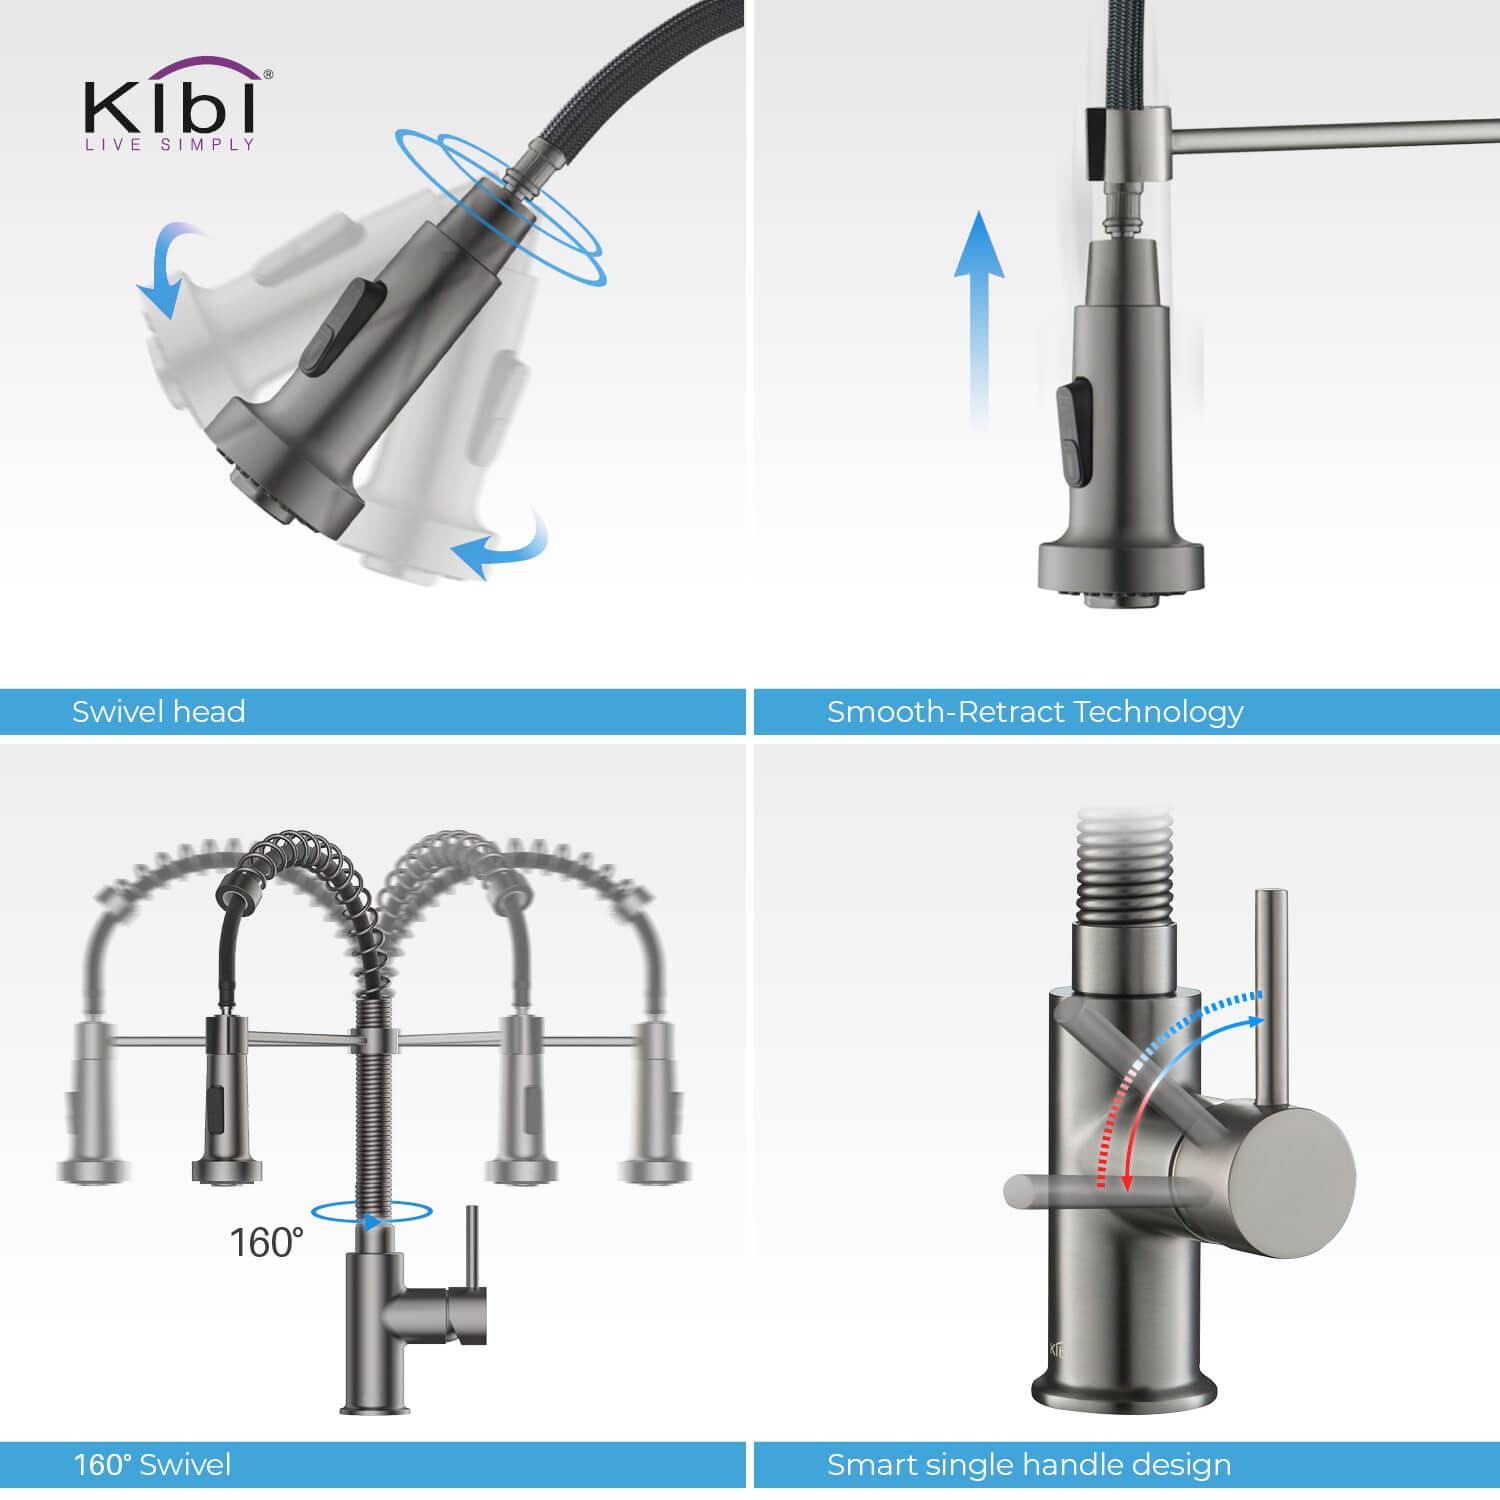 Kibi Aurora Single Handle High Arc Pull Down Kitchen Faucet In Titanium Finish